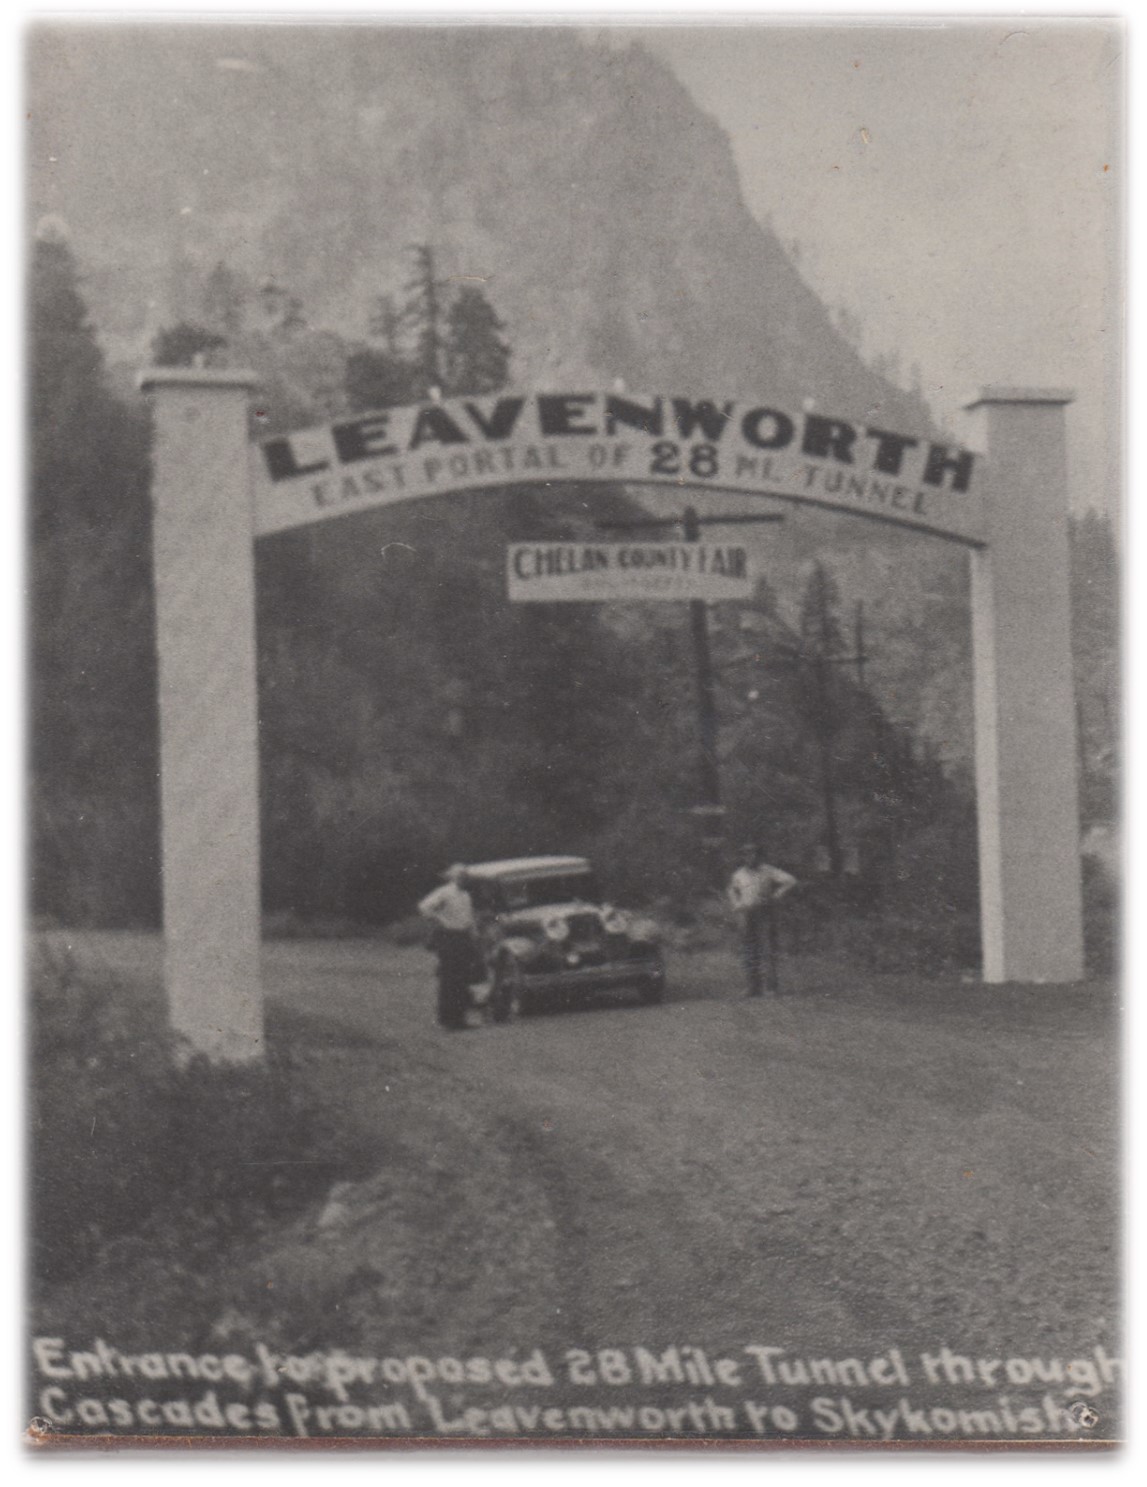 Leavenworth Entrance